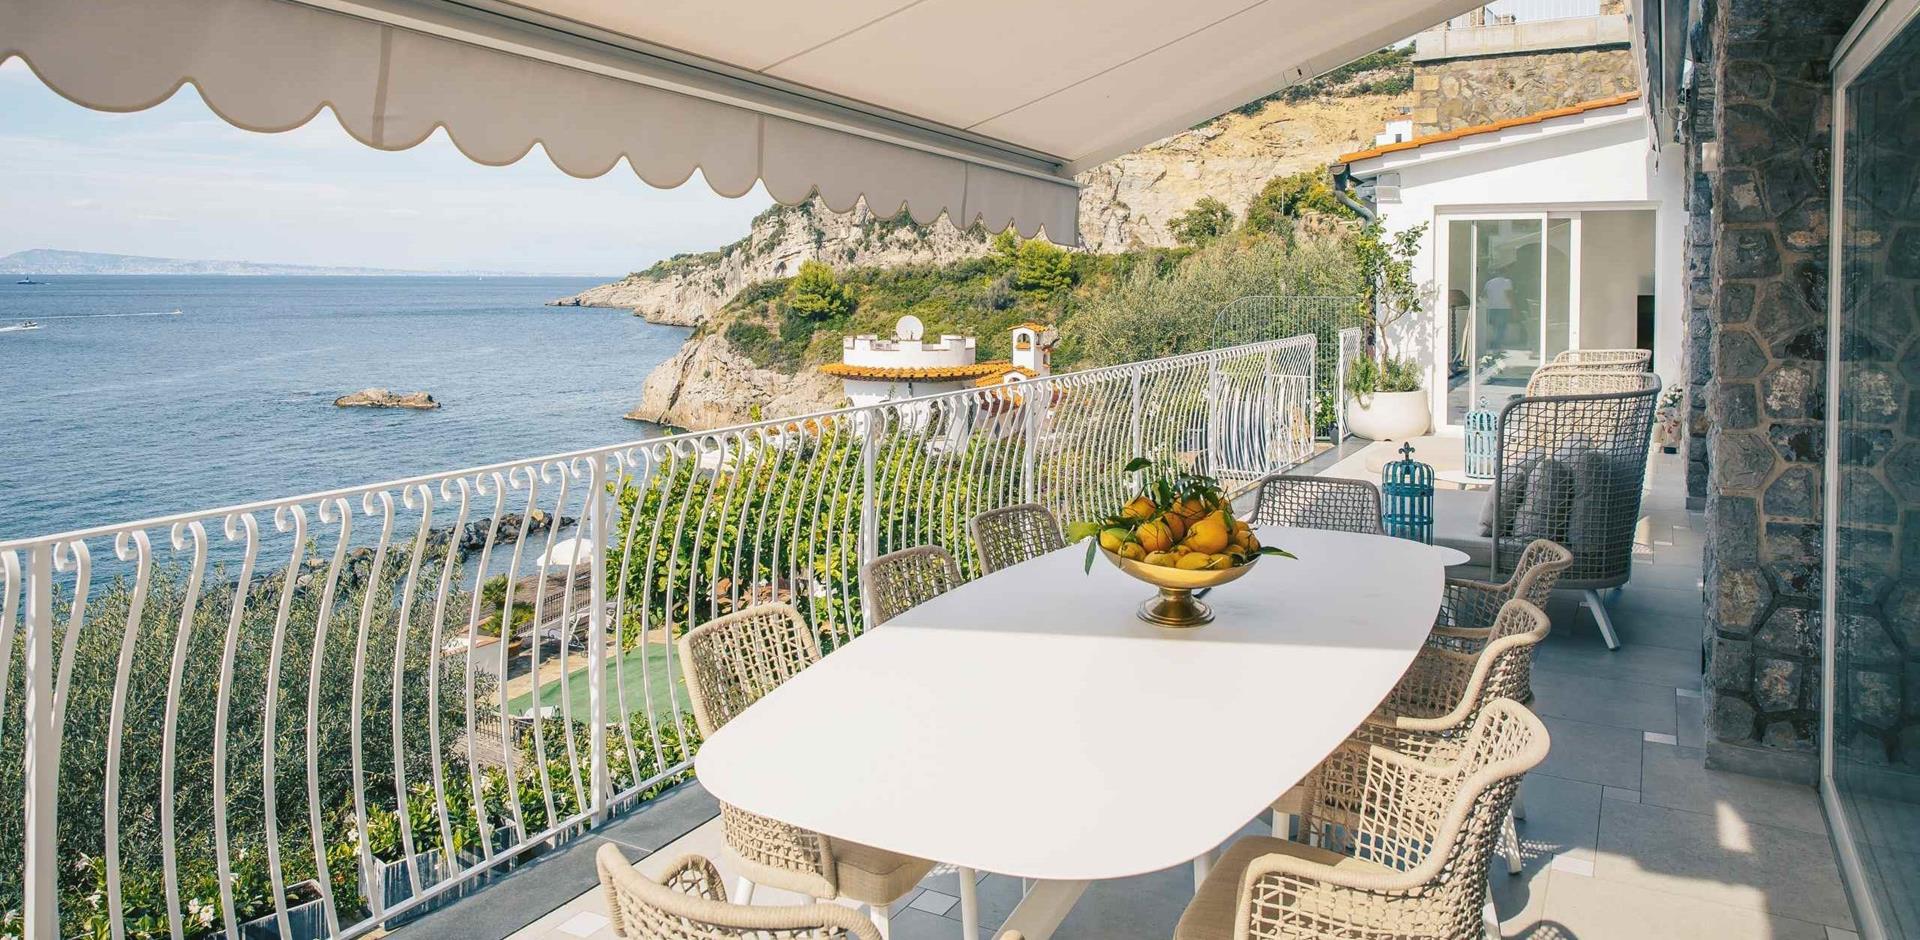 Outdoor dining area, Villa Campanella, Amalfi Coast, Italy, Europe